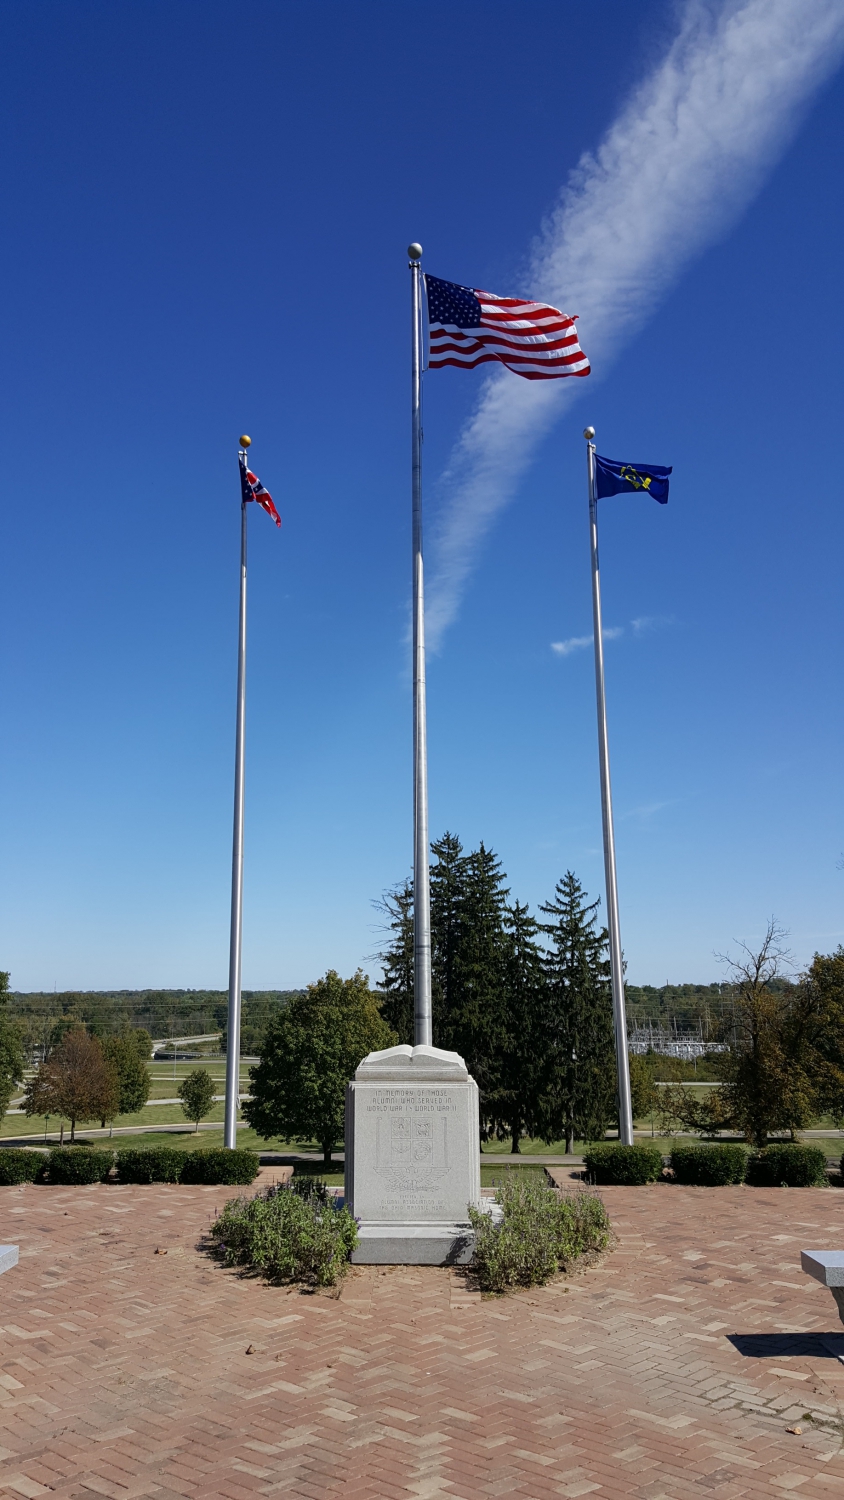 Ohio Masonic Home Veterans Memorial